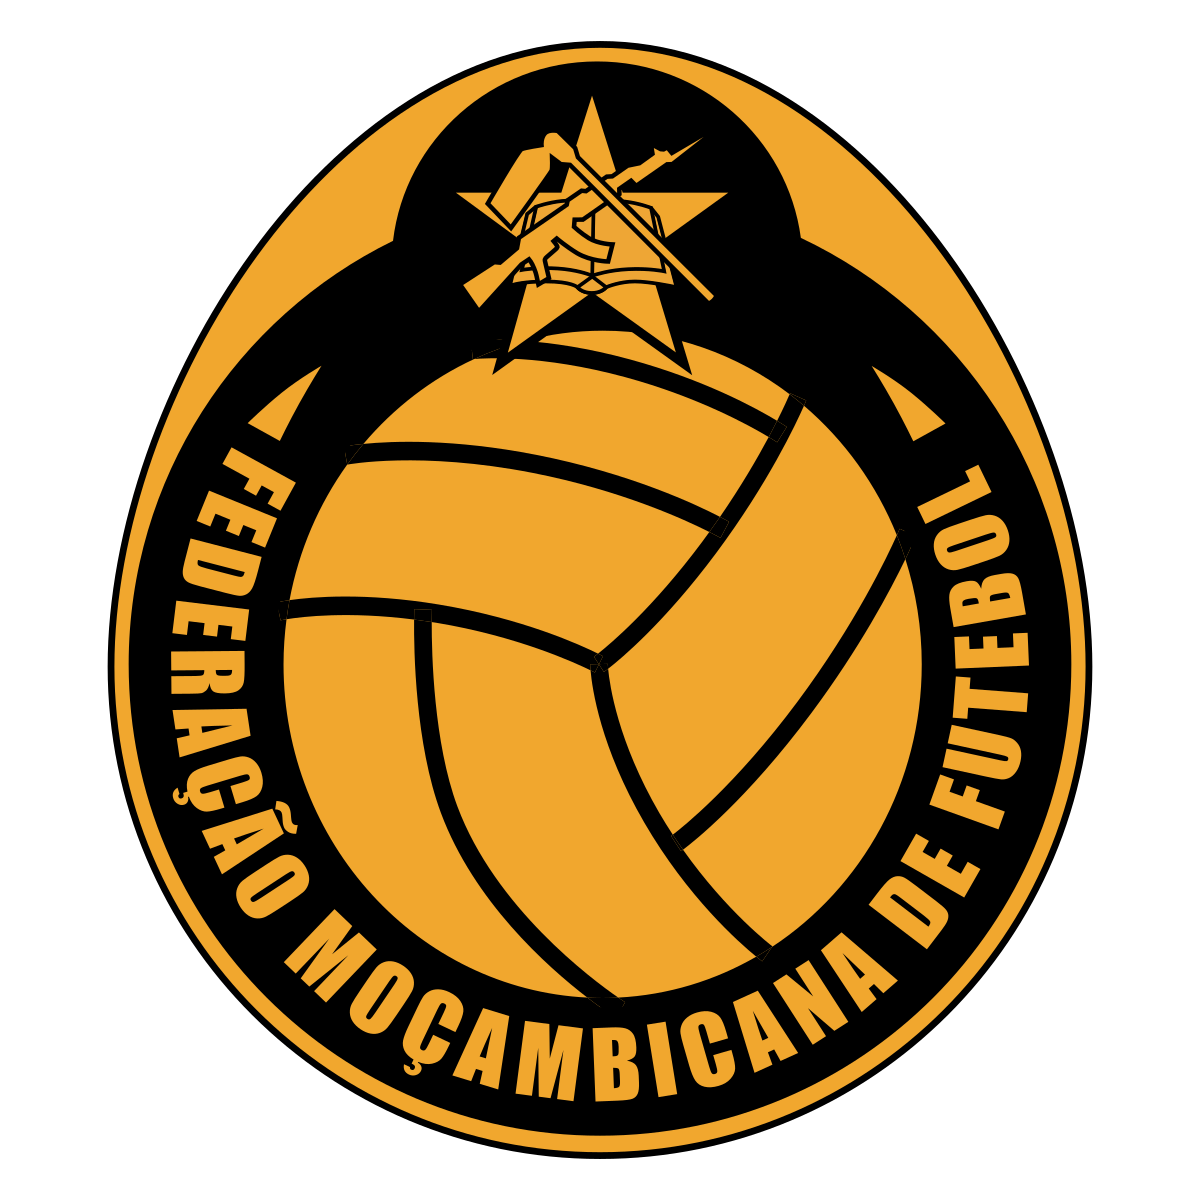 Mozambique W logo